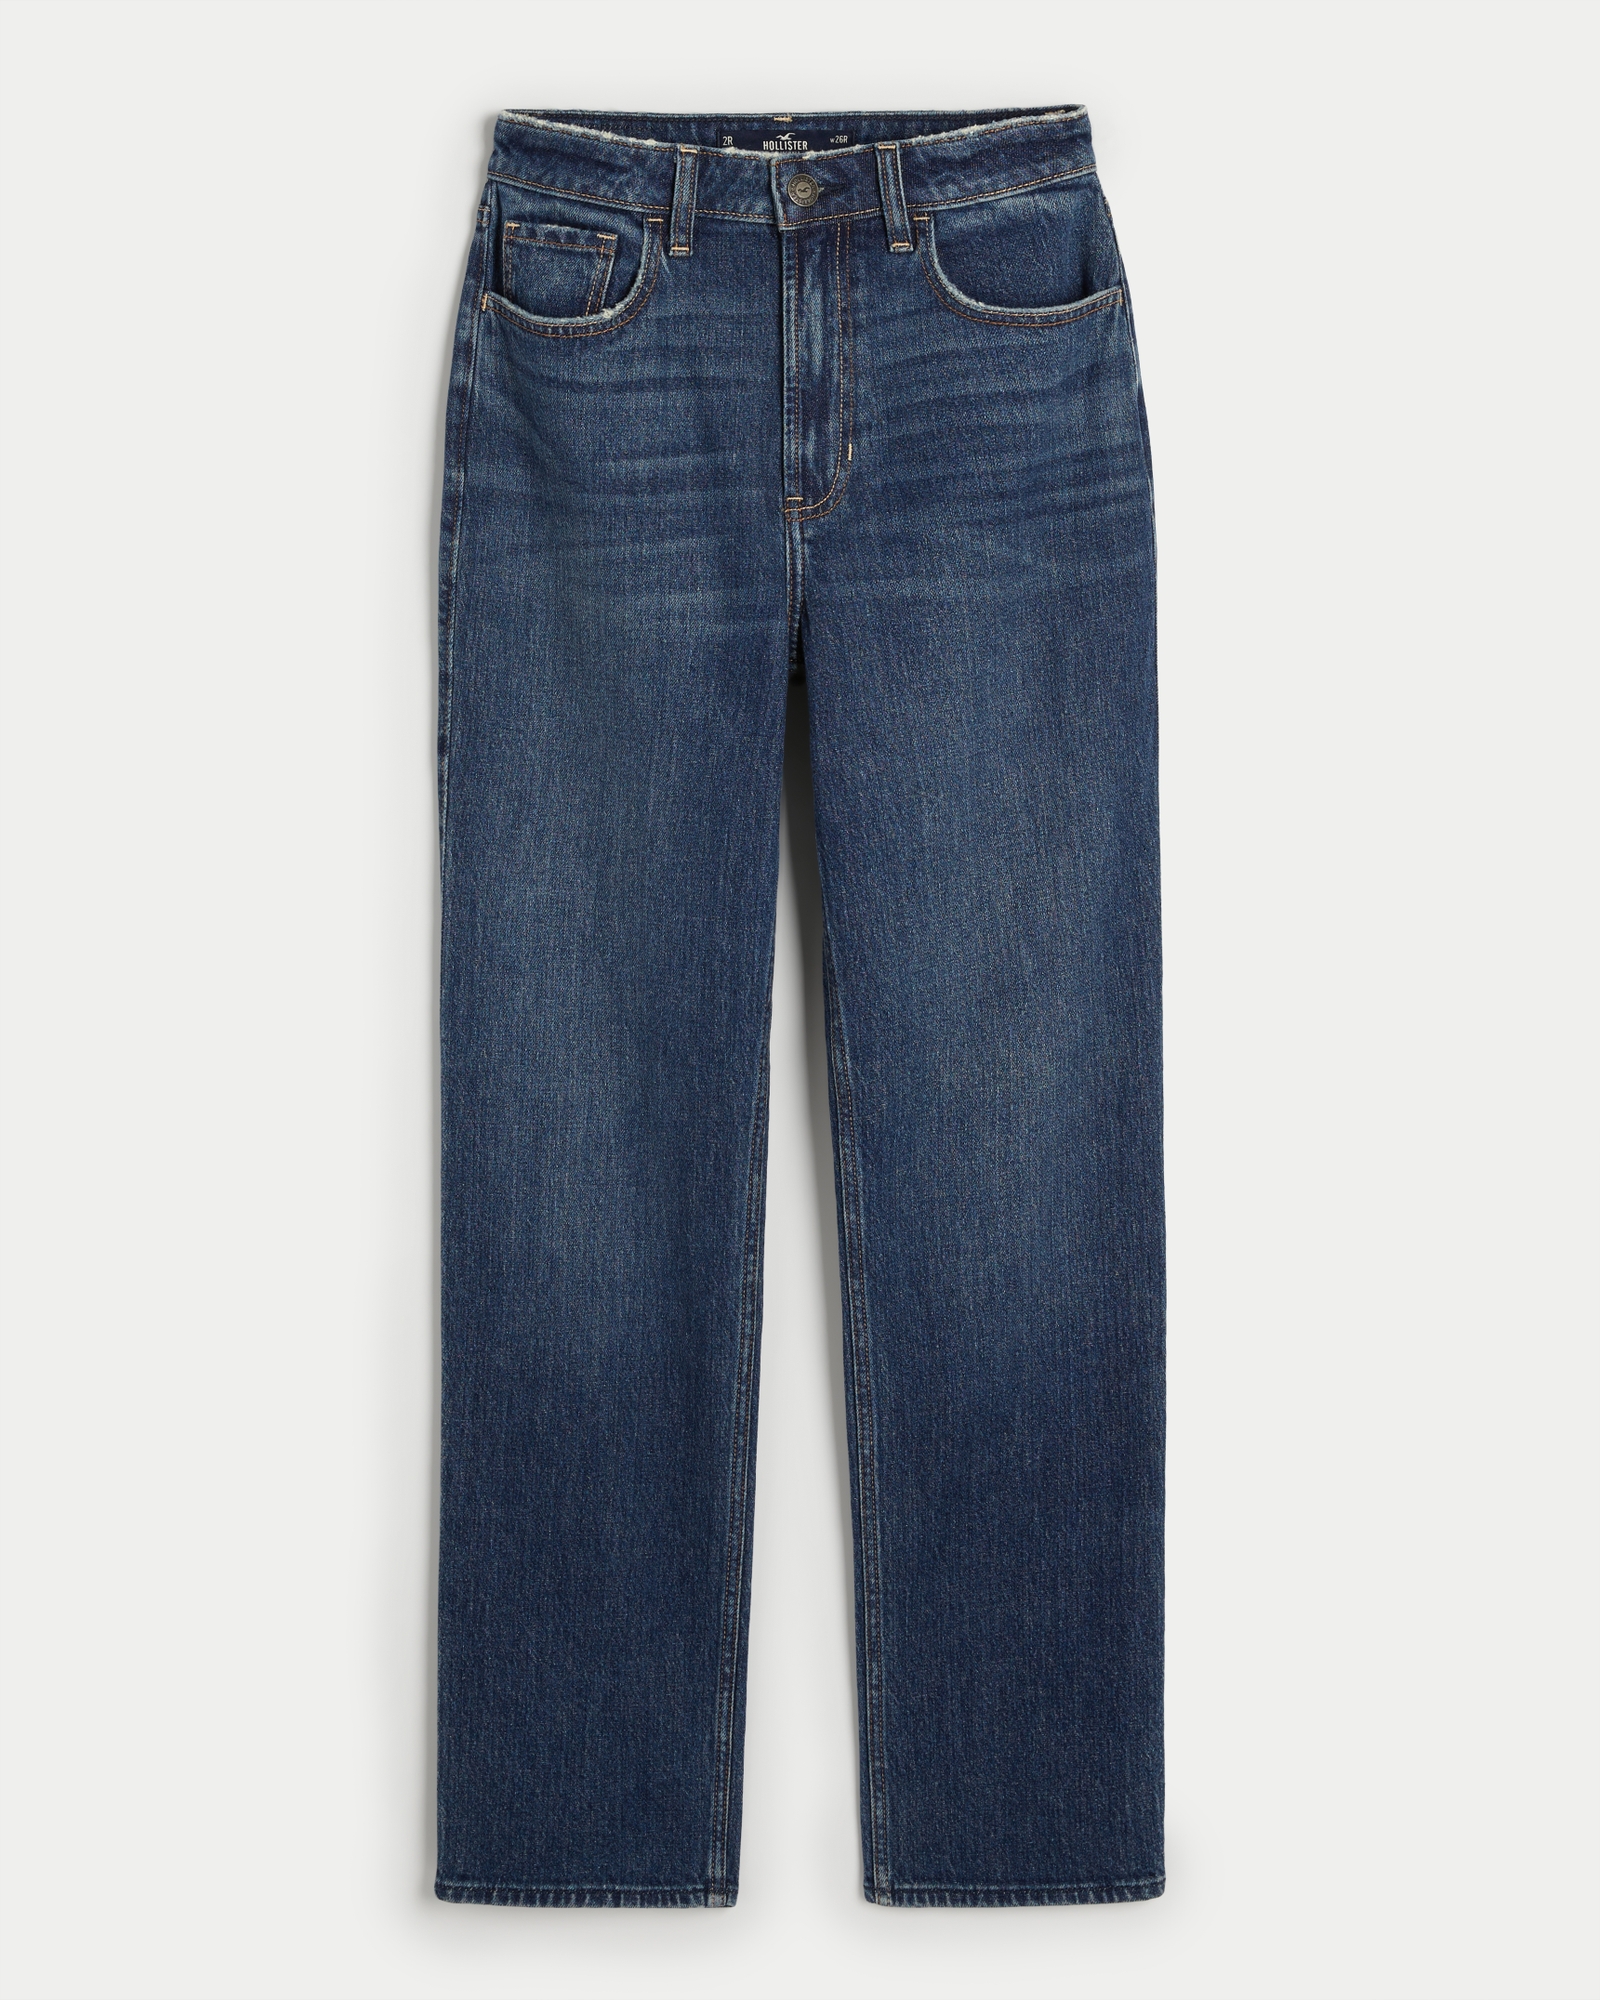 Hollister Stretch Light Wash Slim Cut Regular Rise Straight Leg Denim Jeans  - Size 5 (S/M)